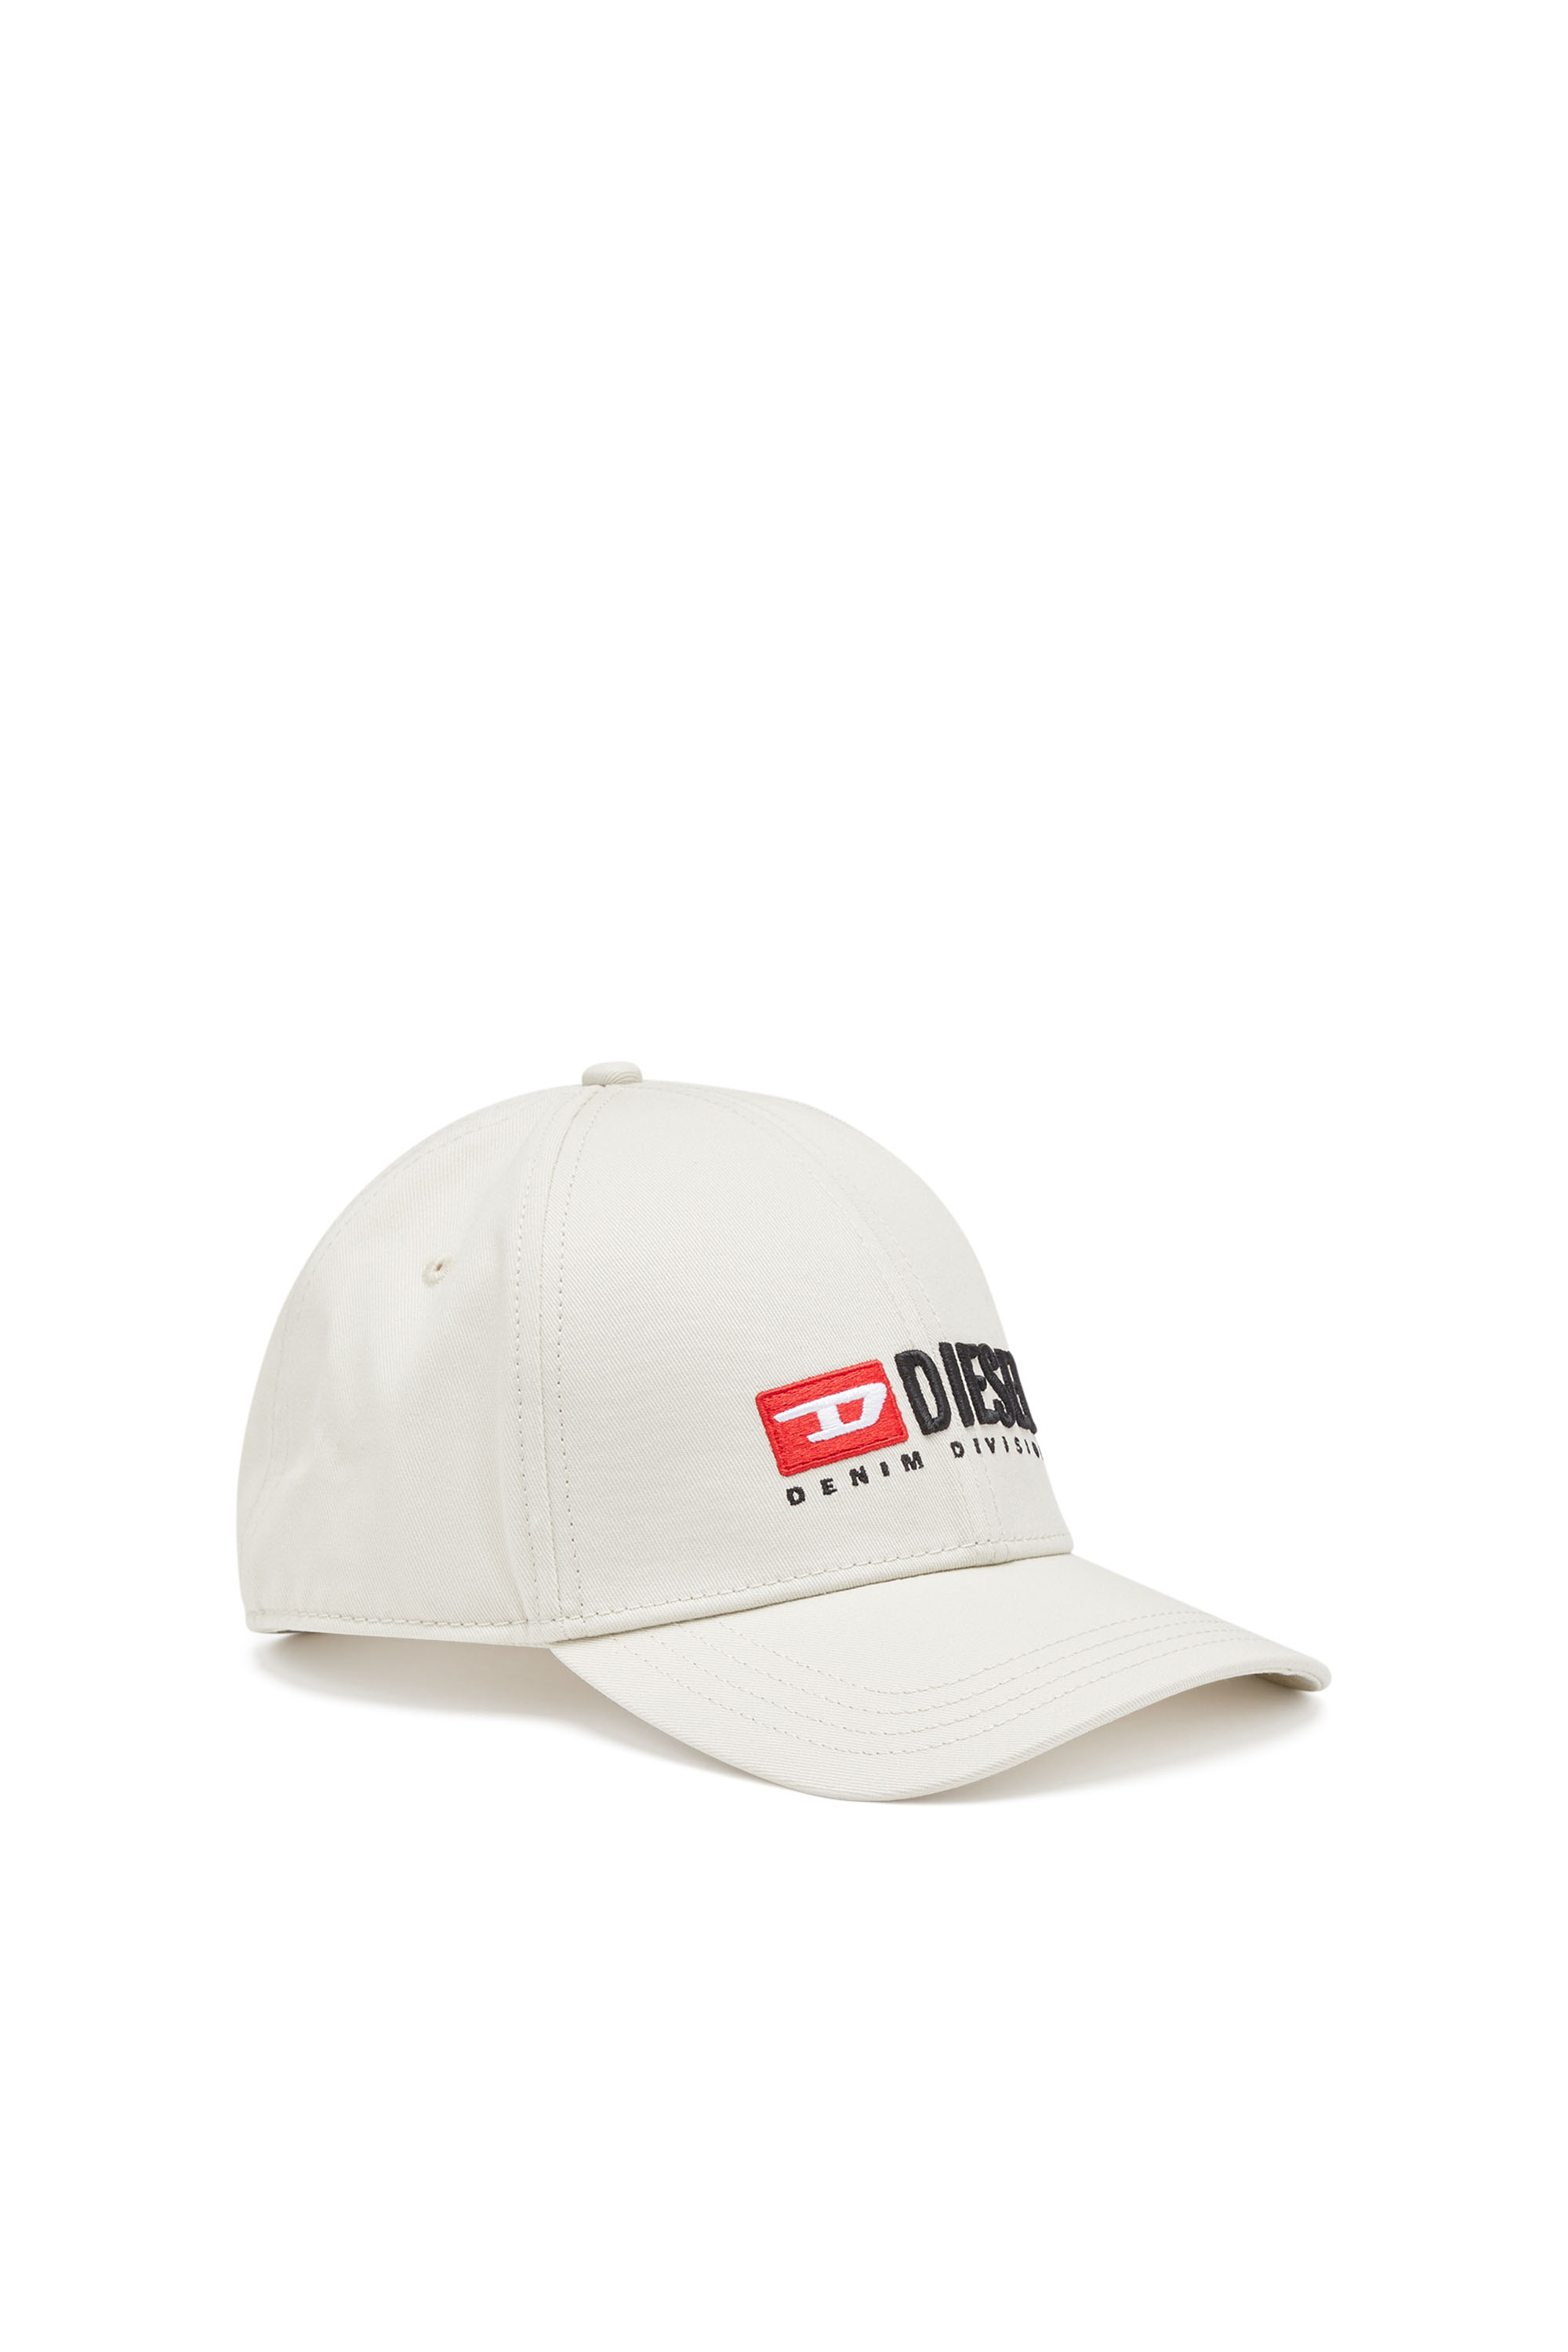 Diesel - CORRY-DIV, Unisex Baseball cap with Denim Division logo in White - Image 1